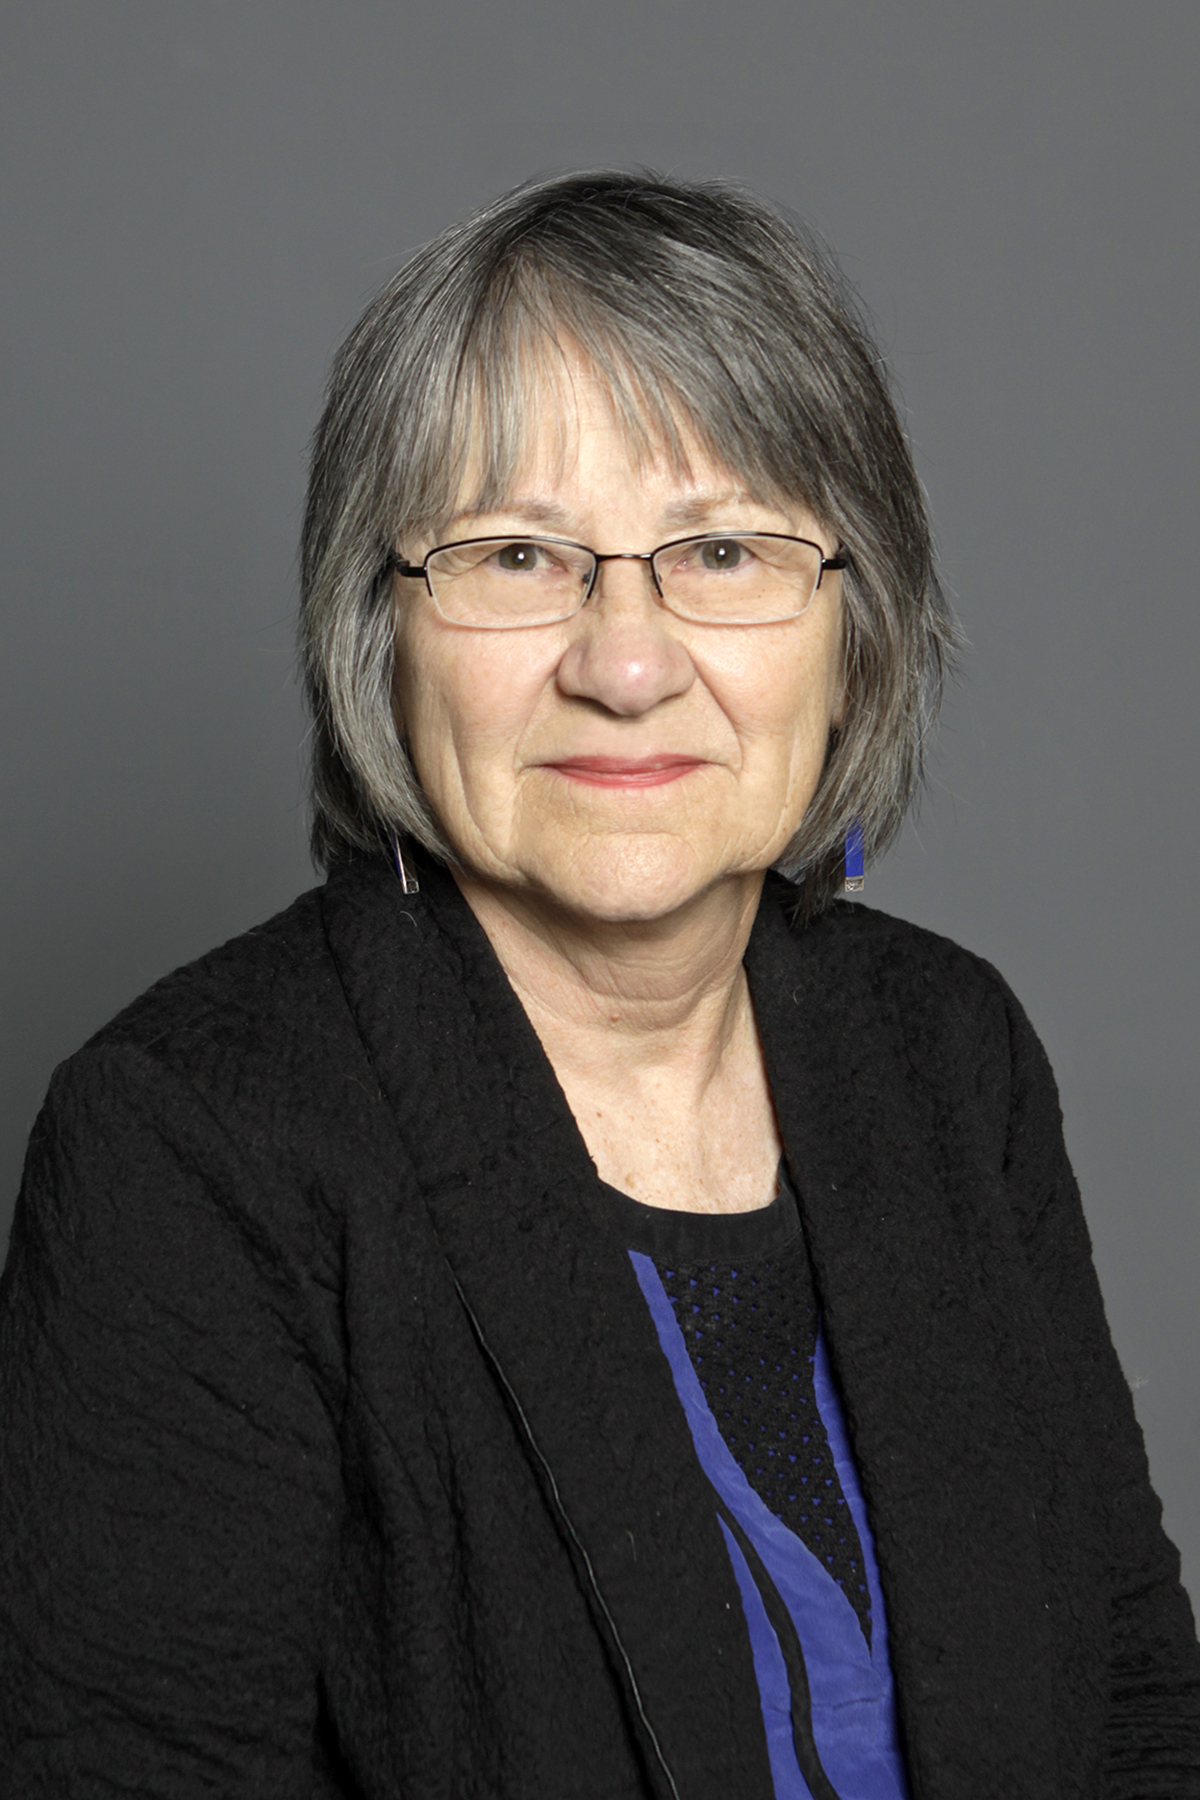 Kathleen A. Staudt